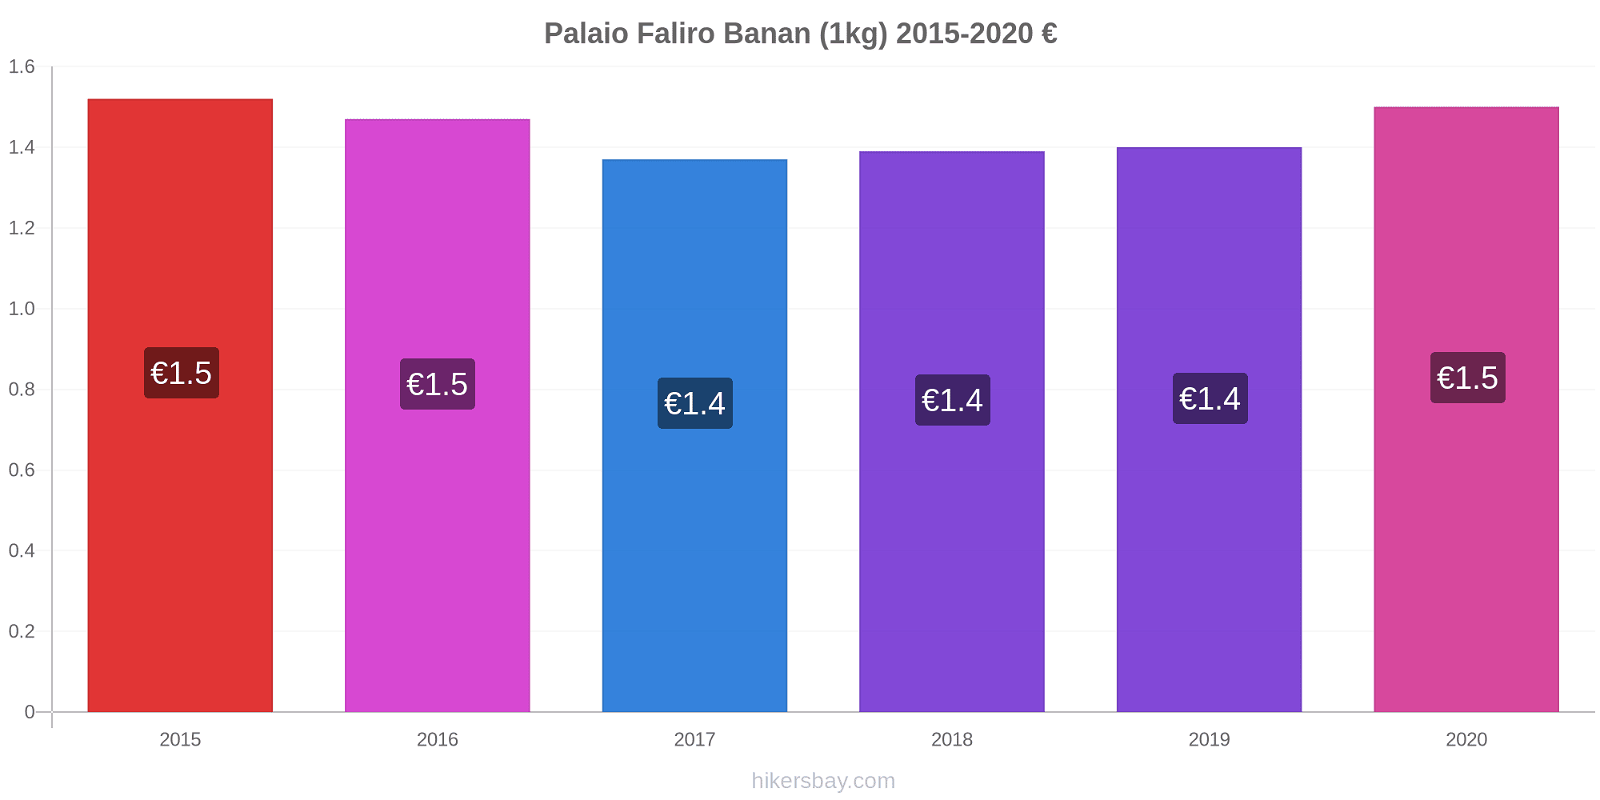 Palaio Faliro prisendringer Banan (1kg) hikersbay.com